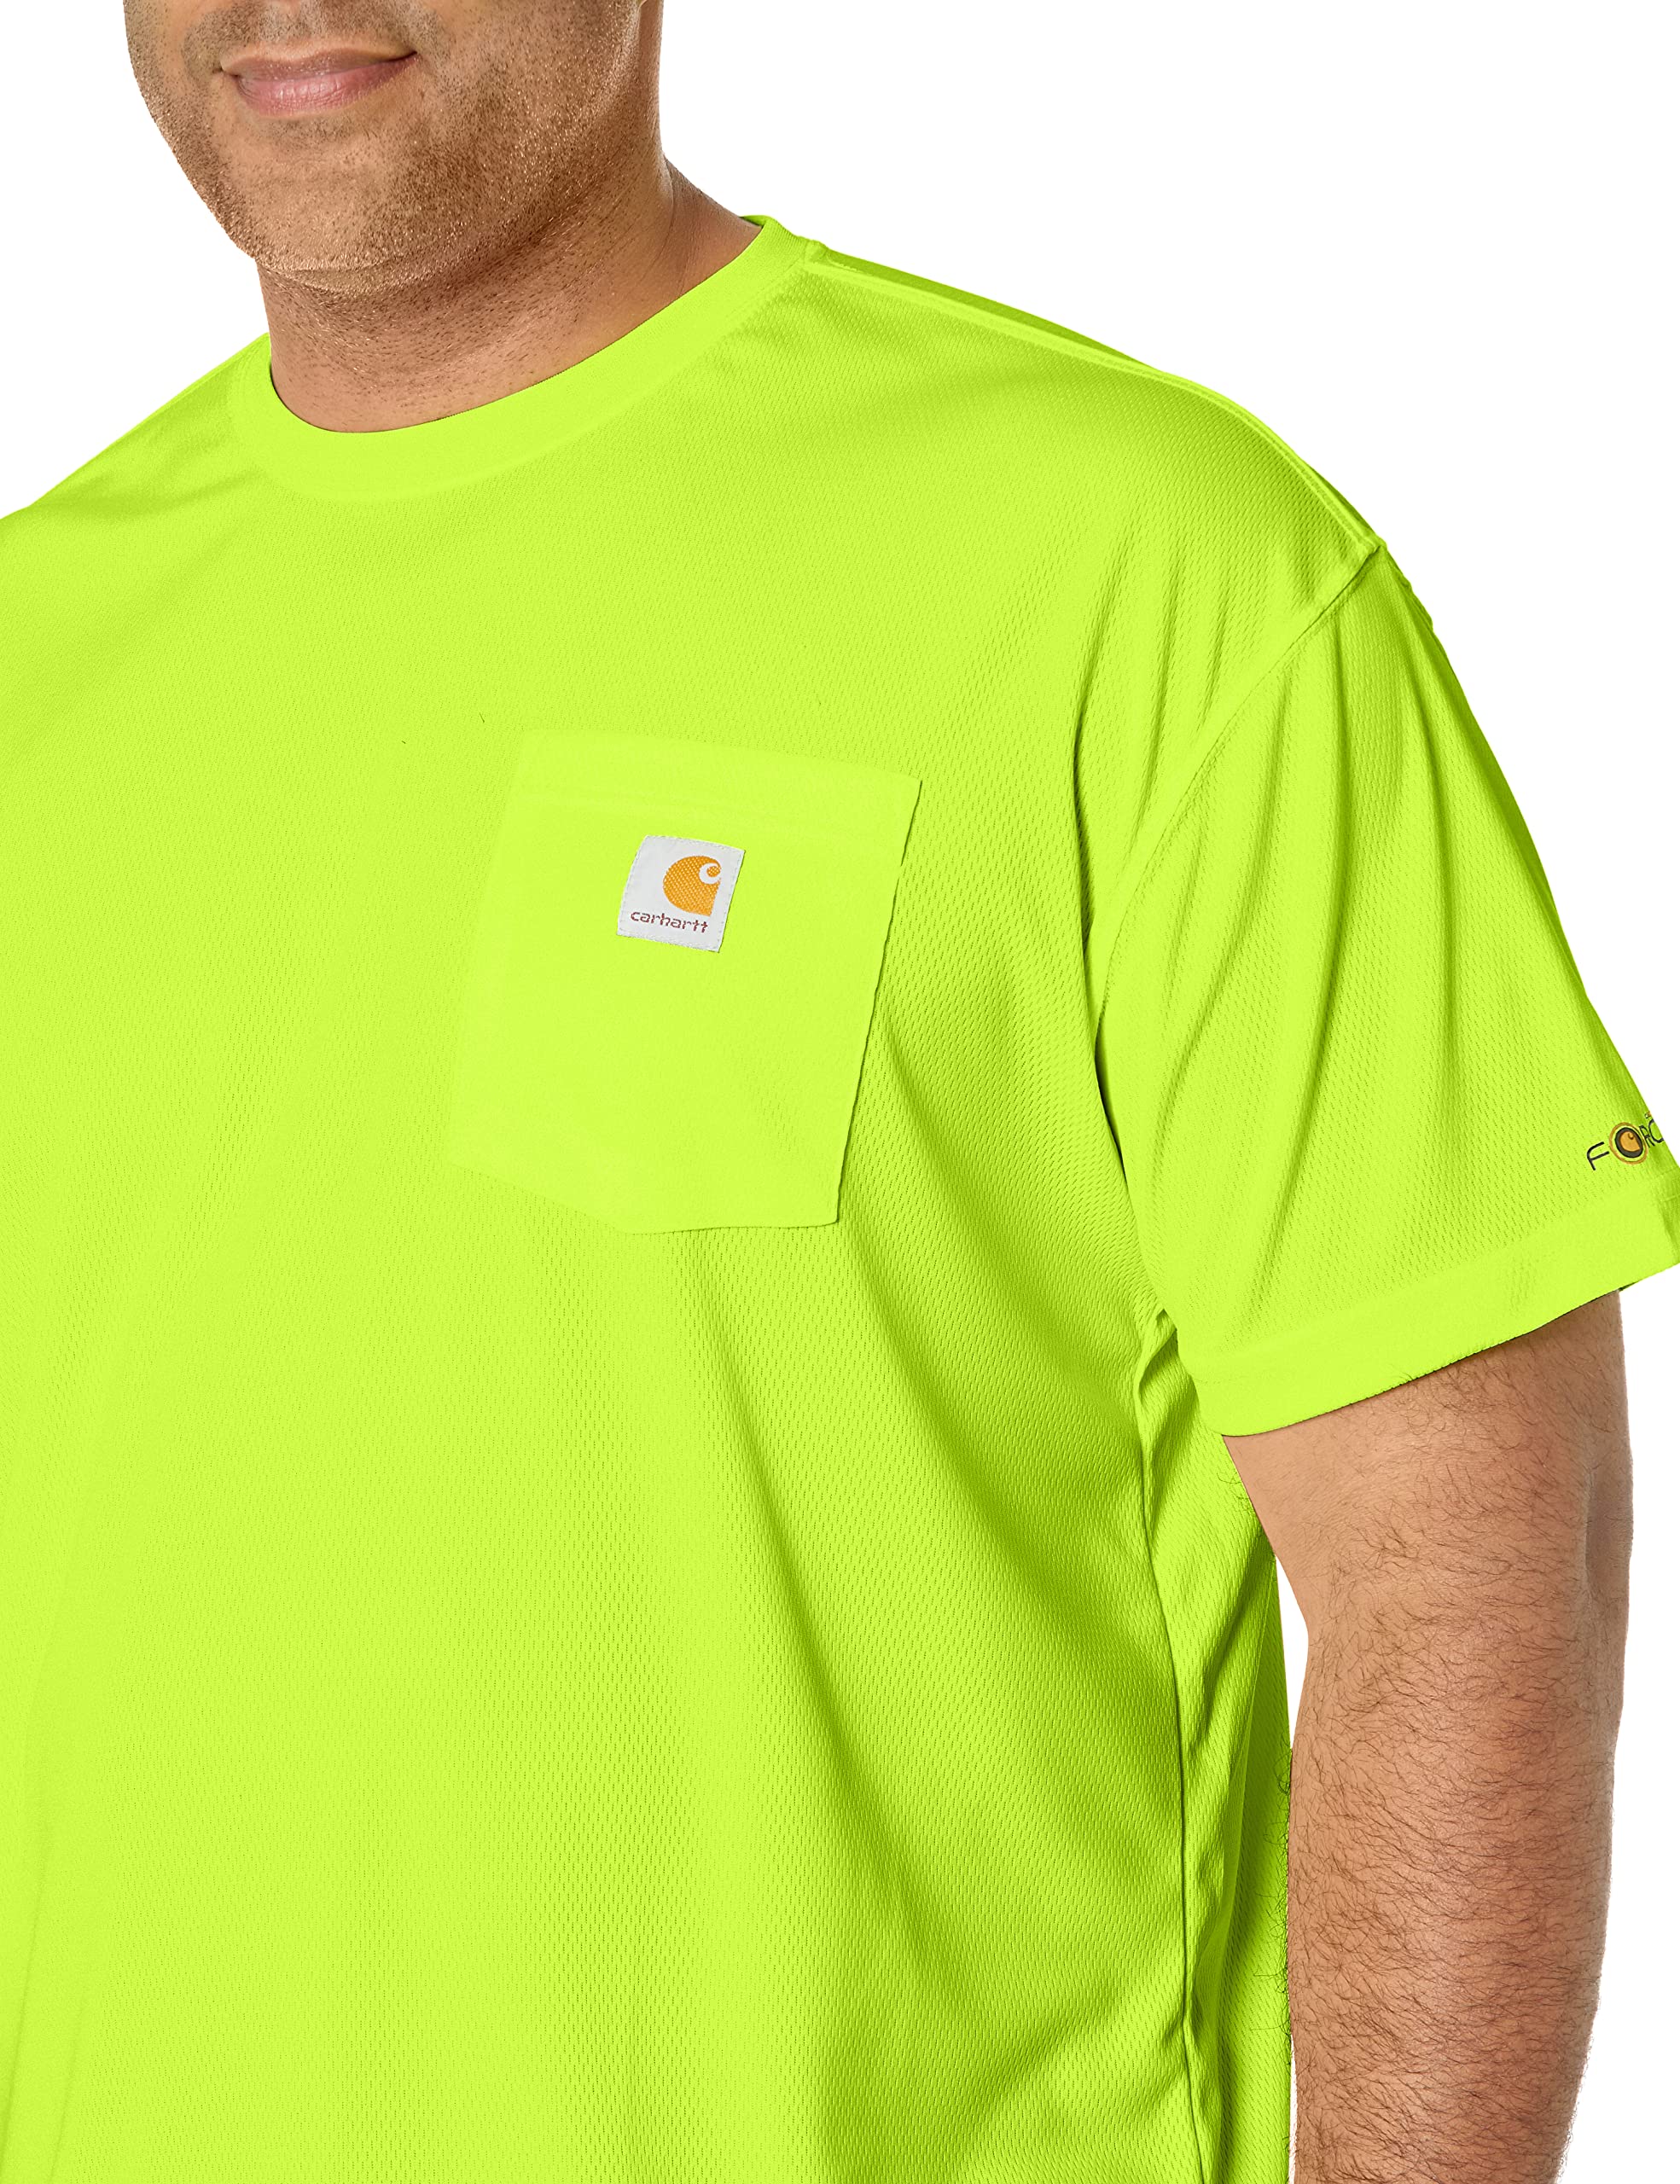 Carhartt Men's Force Color Enhanced Short-Sleeve T-Shirt